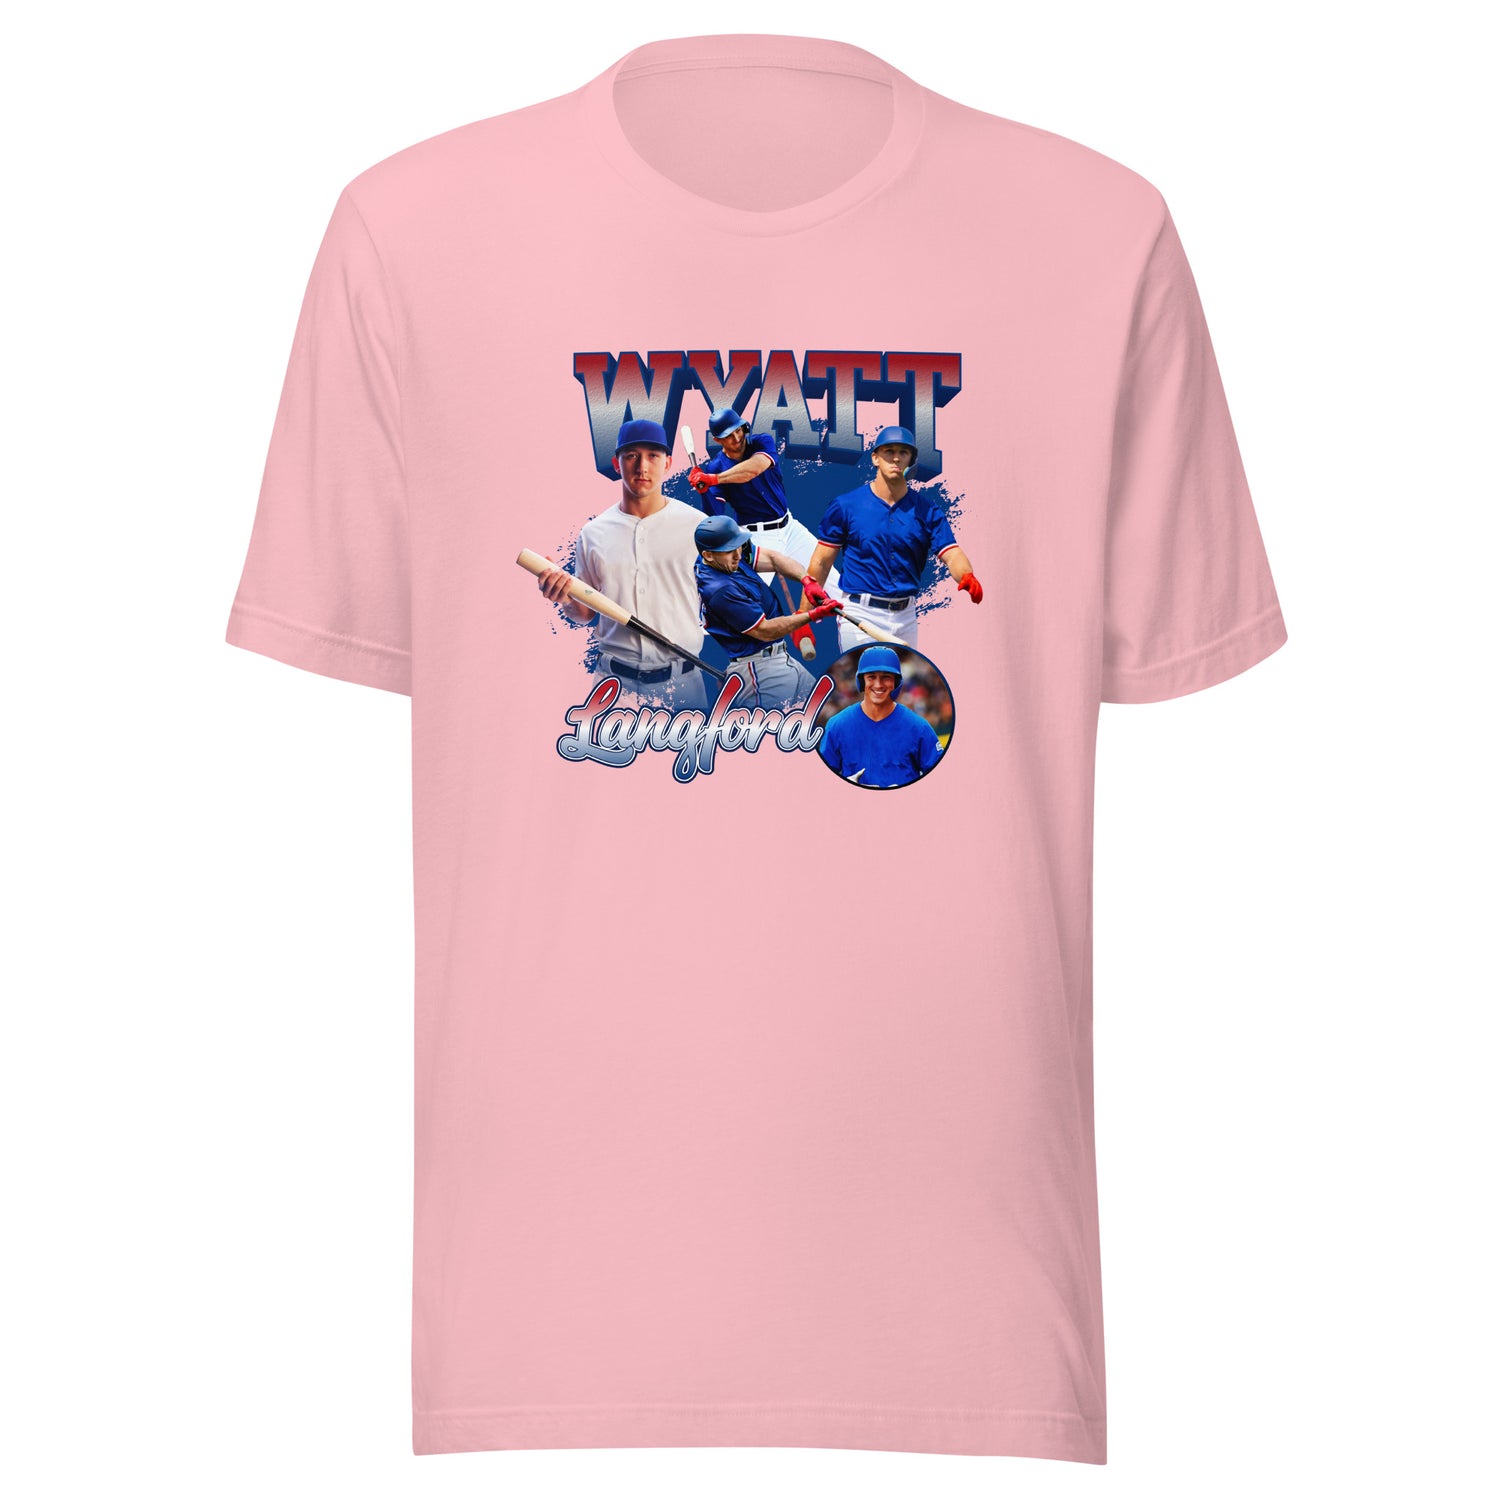 Wyatt Langford "Vintage" t-shirt - Fan Arch